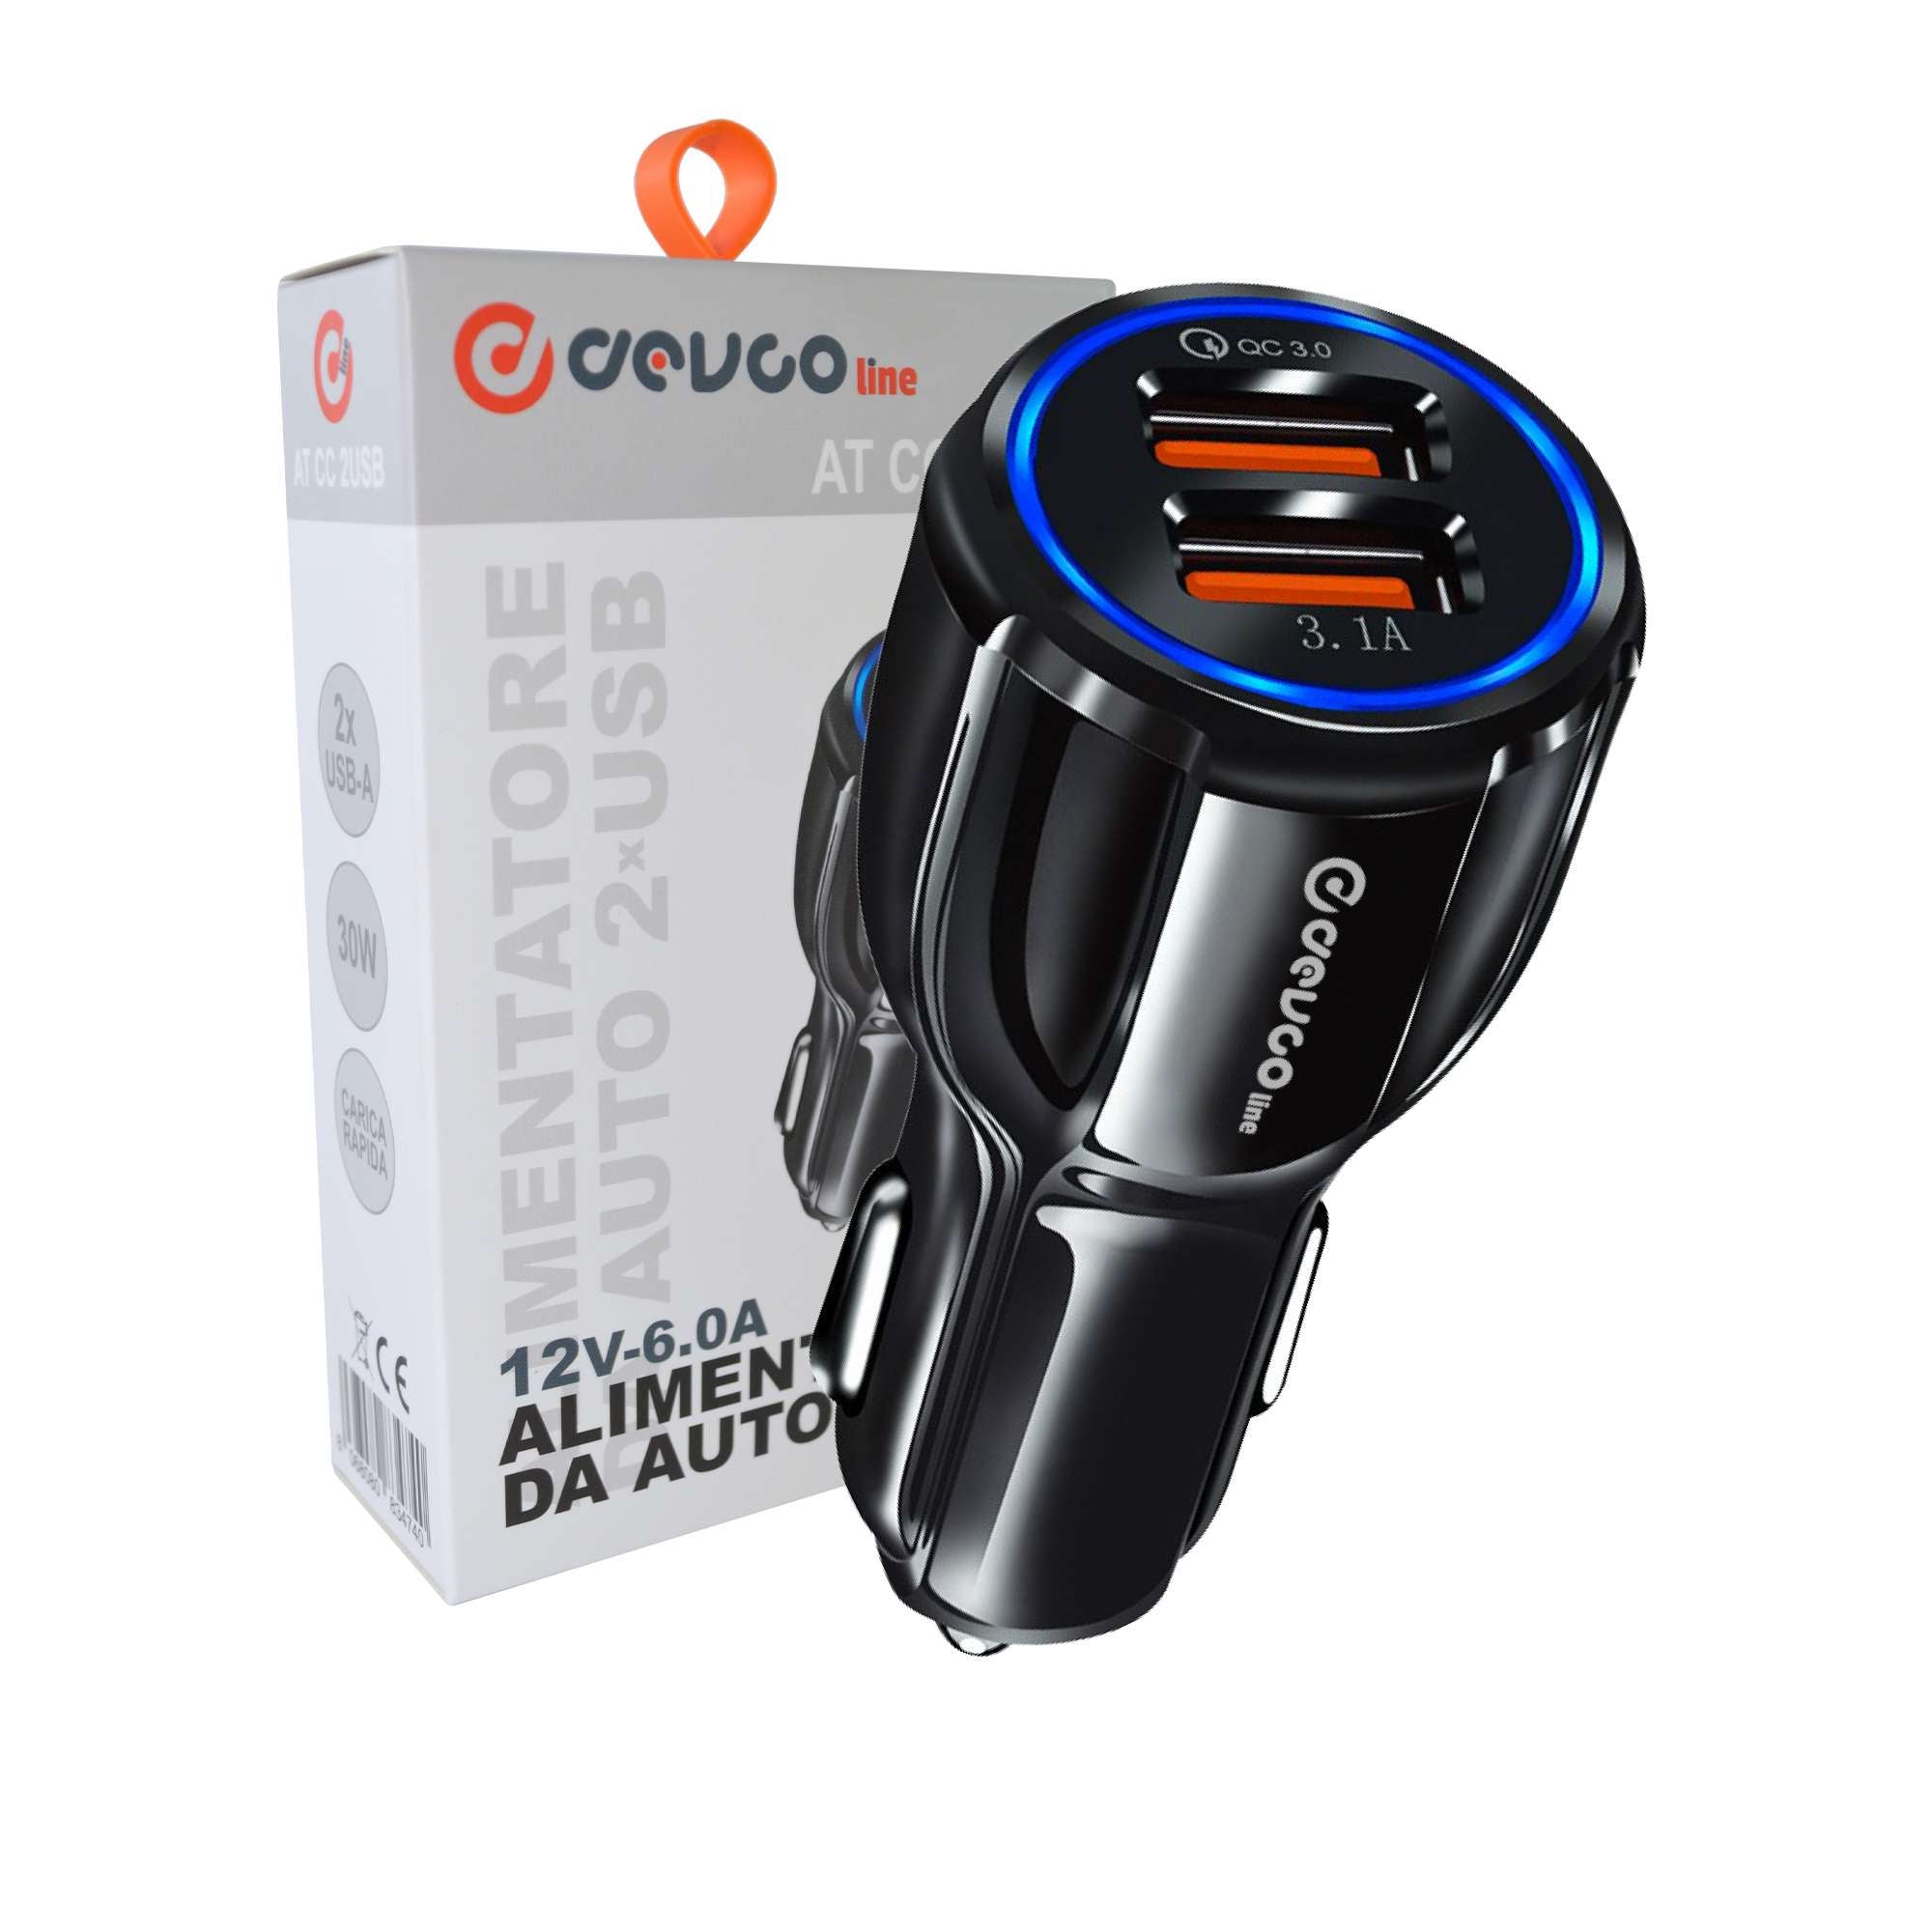 Car Power Supply USB 6.0A - DEVCOline - AT CC 2USB